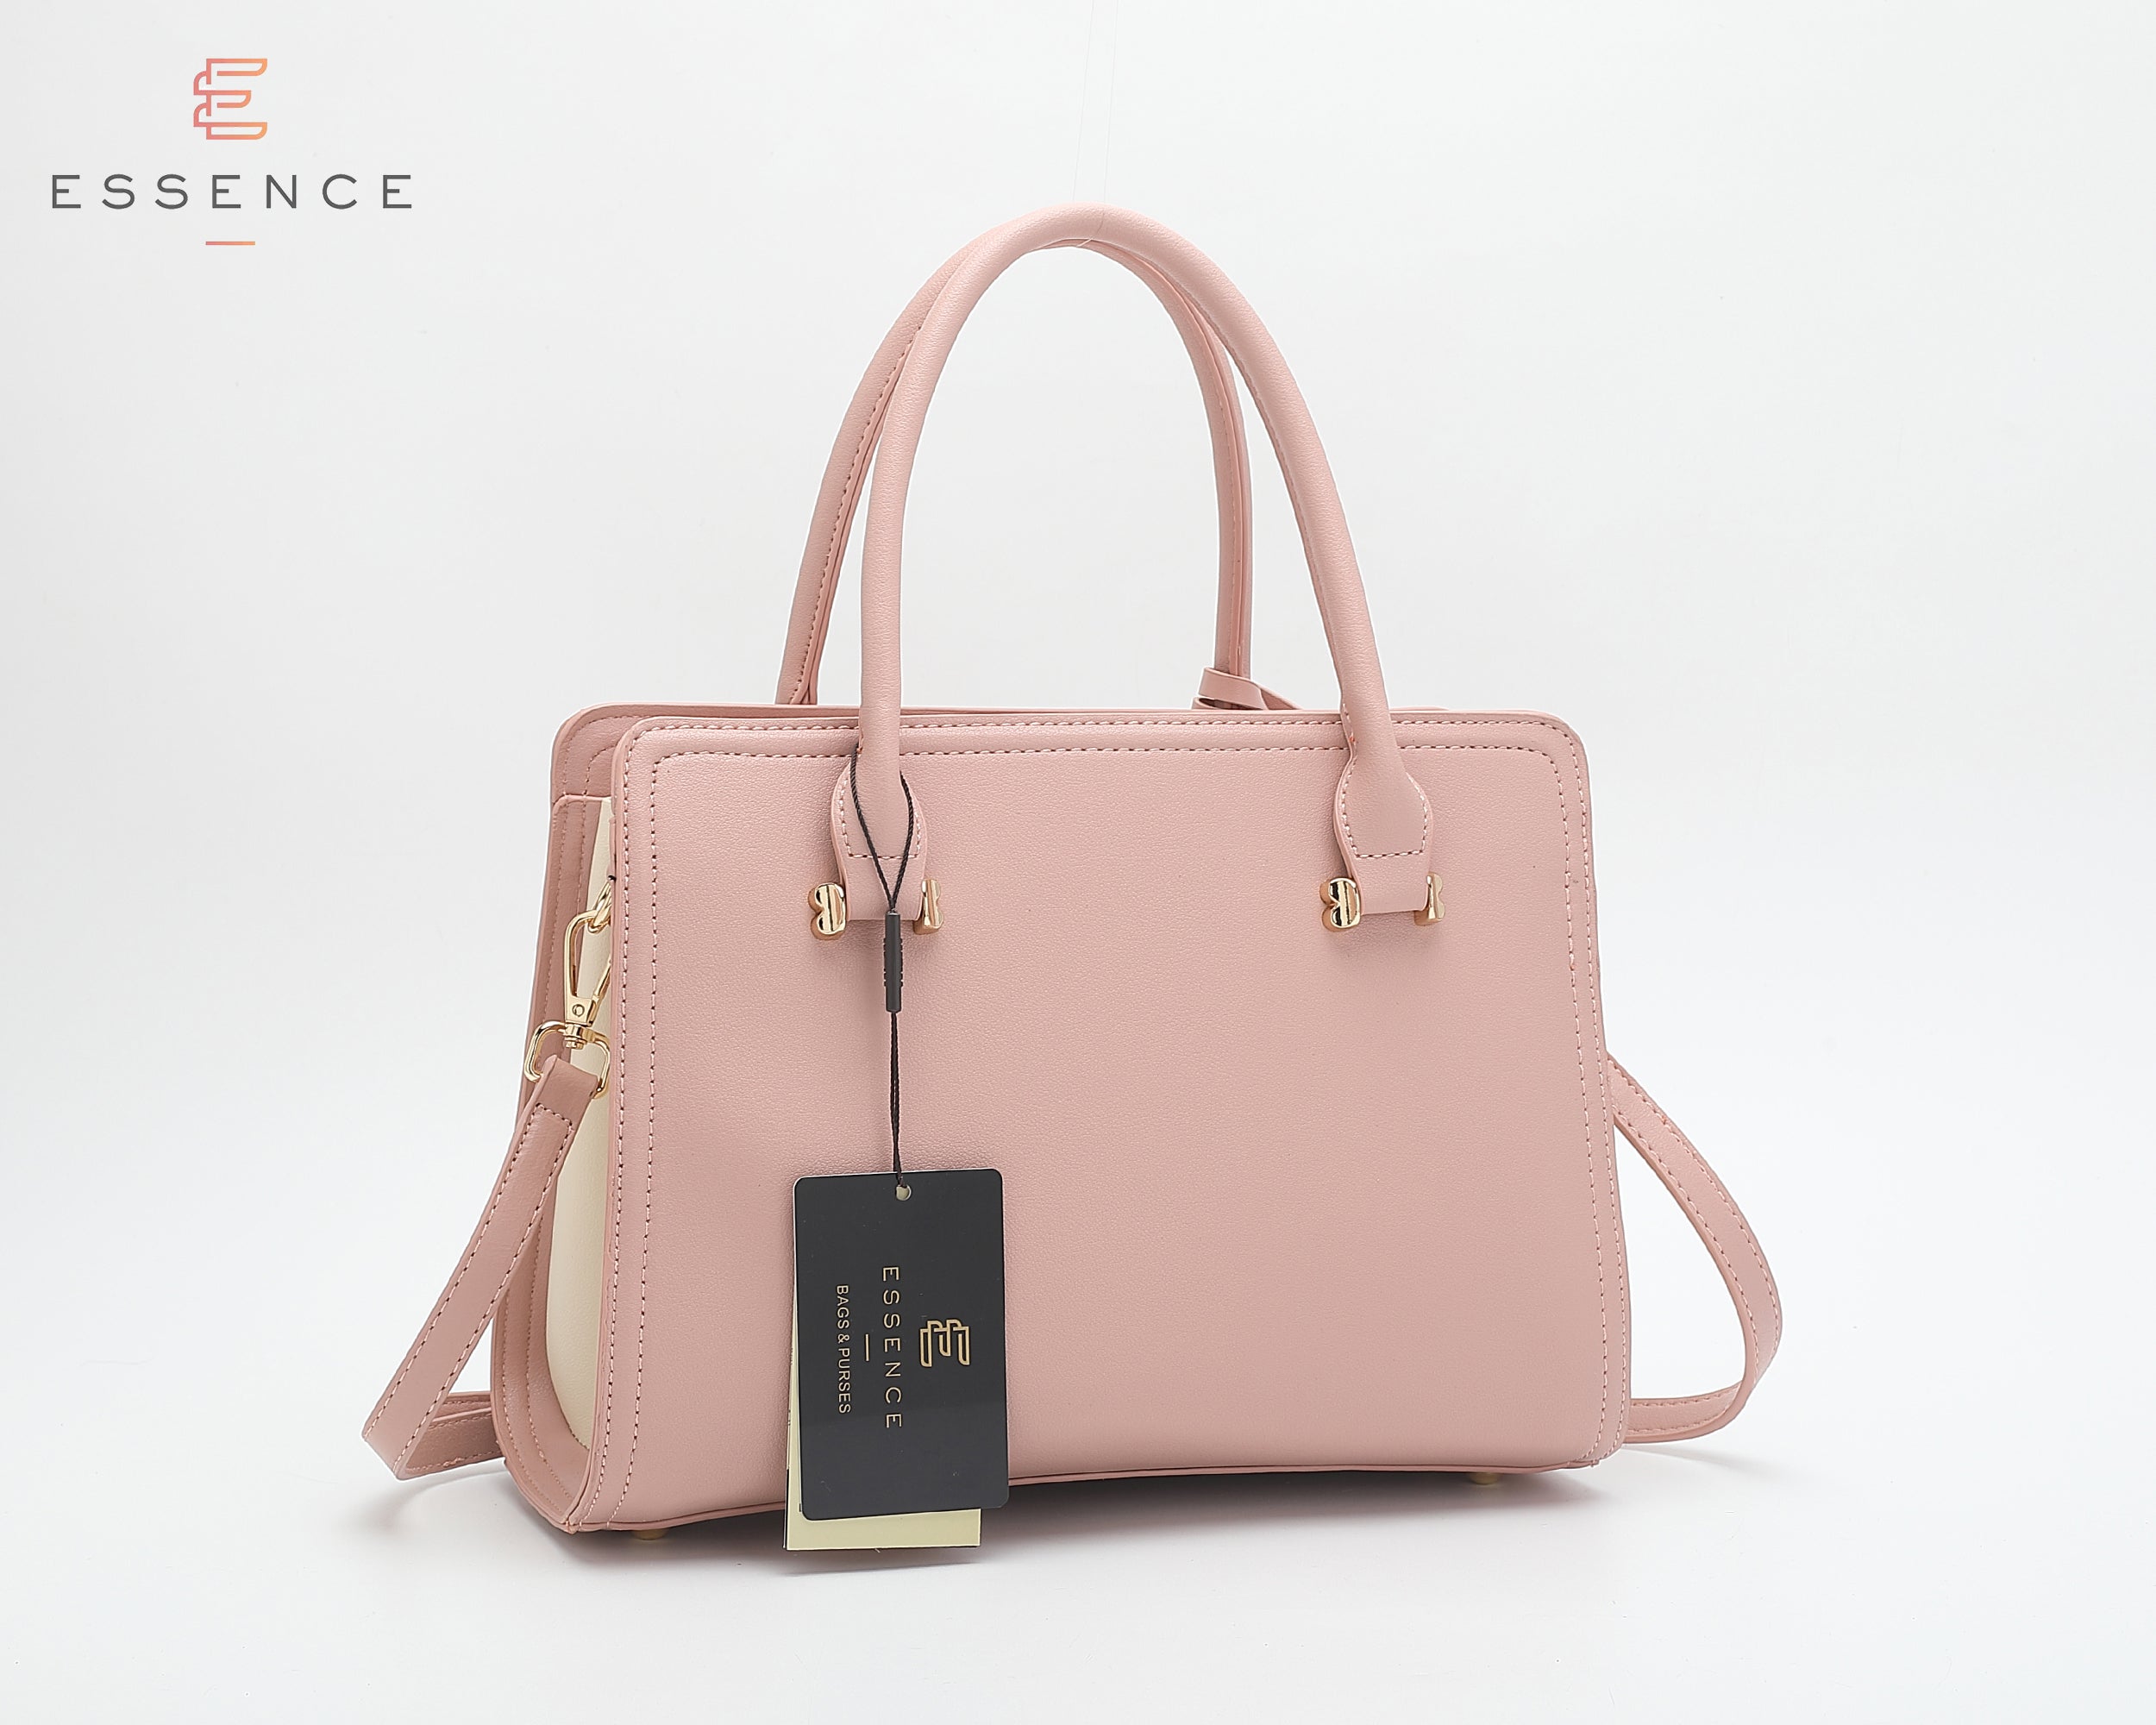 Buy Hot Pink Handbag Online In India - Etsy India